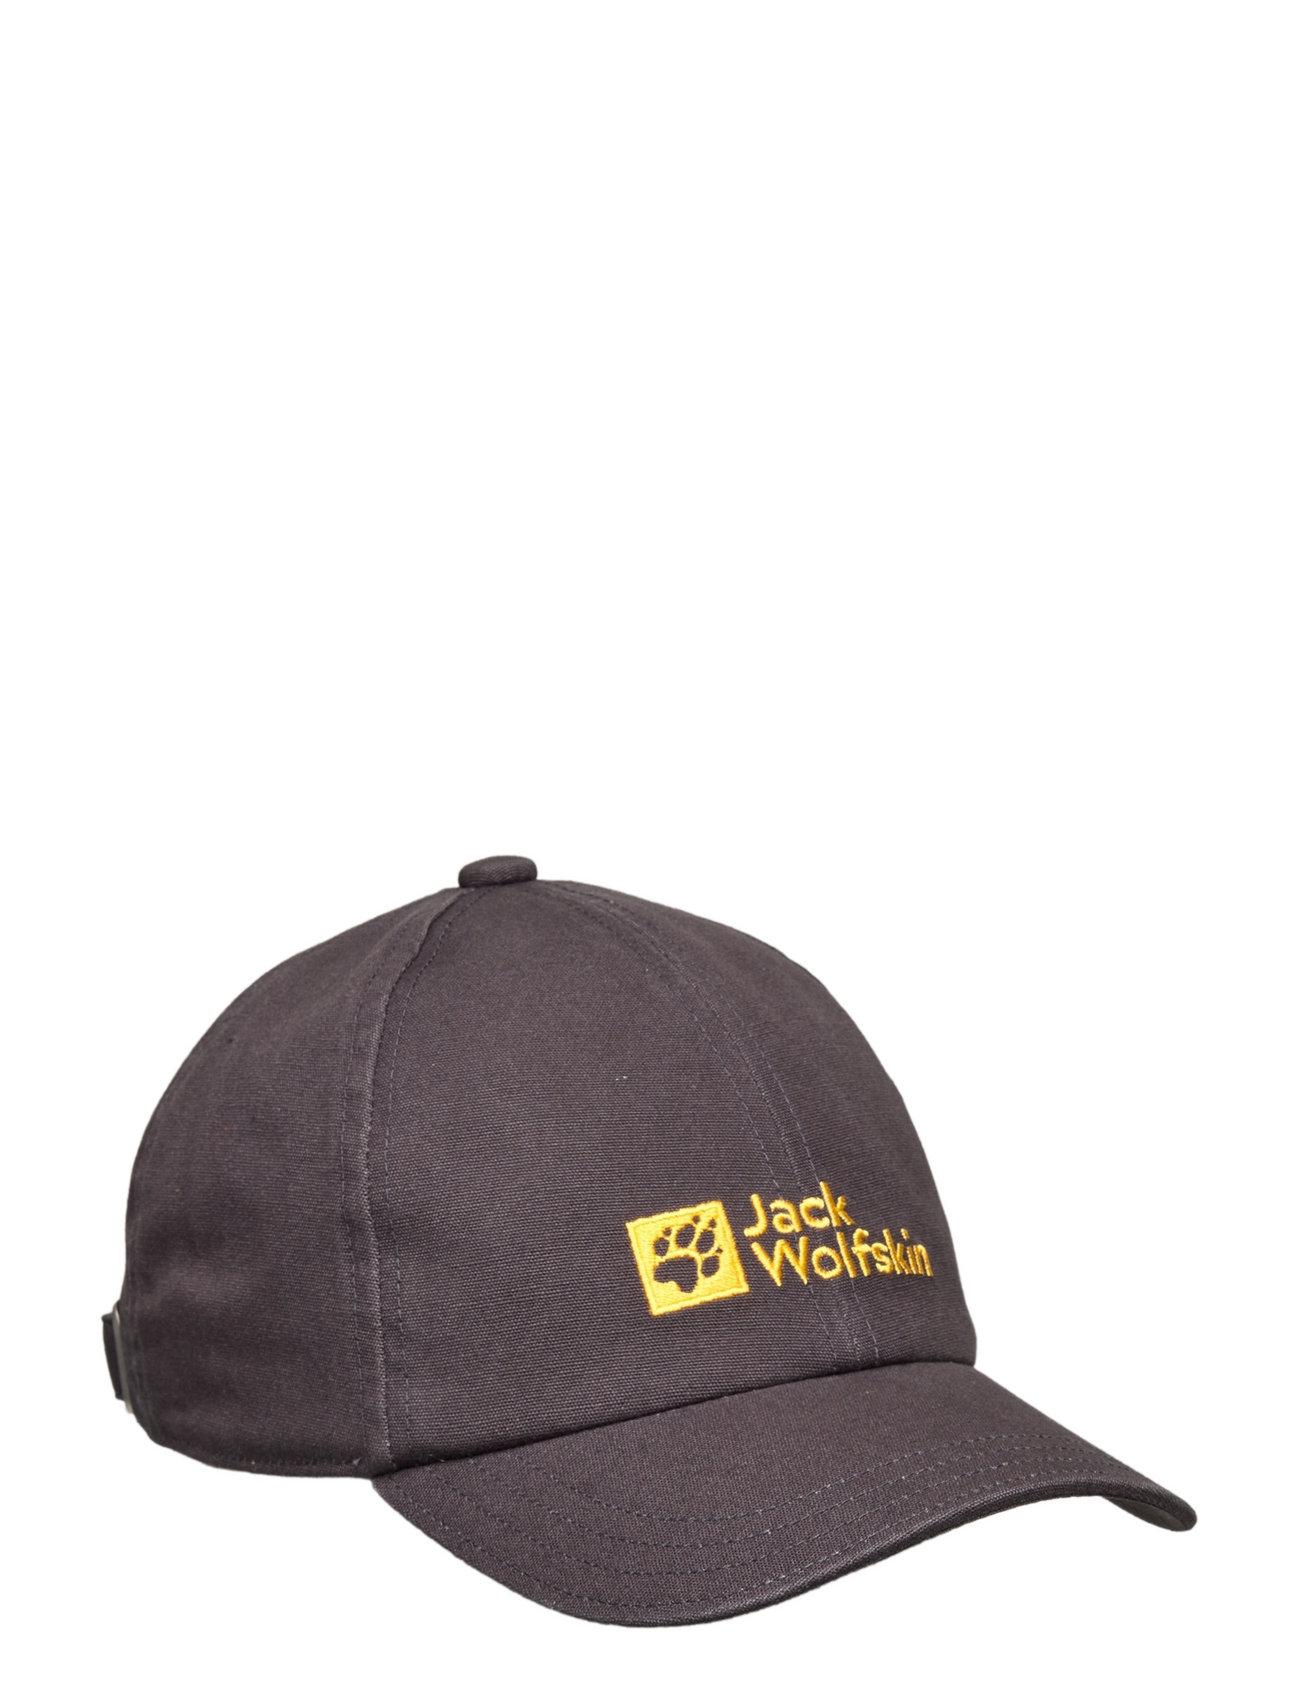 – Wolfskin Jack shop Booztlet Cap – at K accessories Baseball